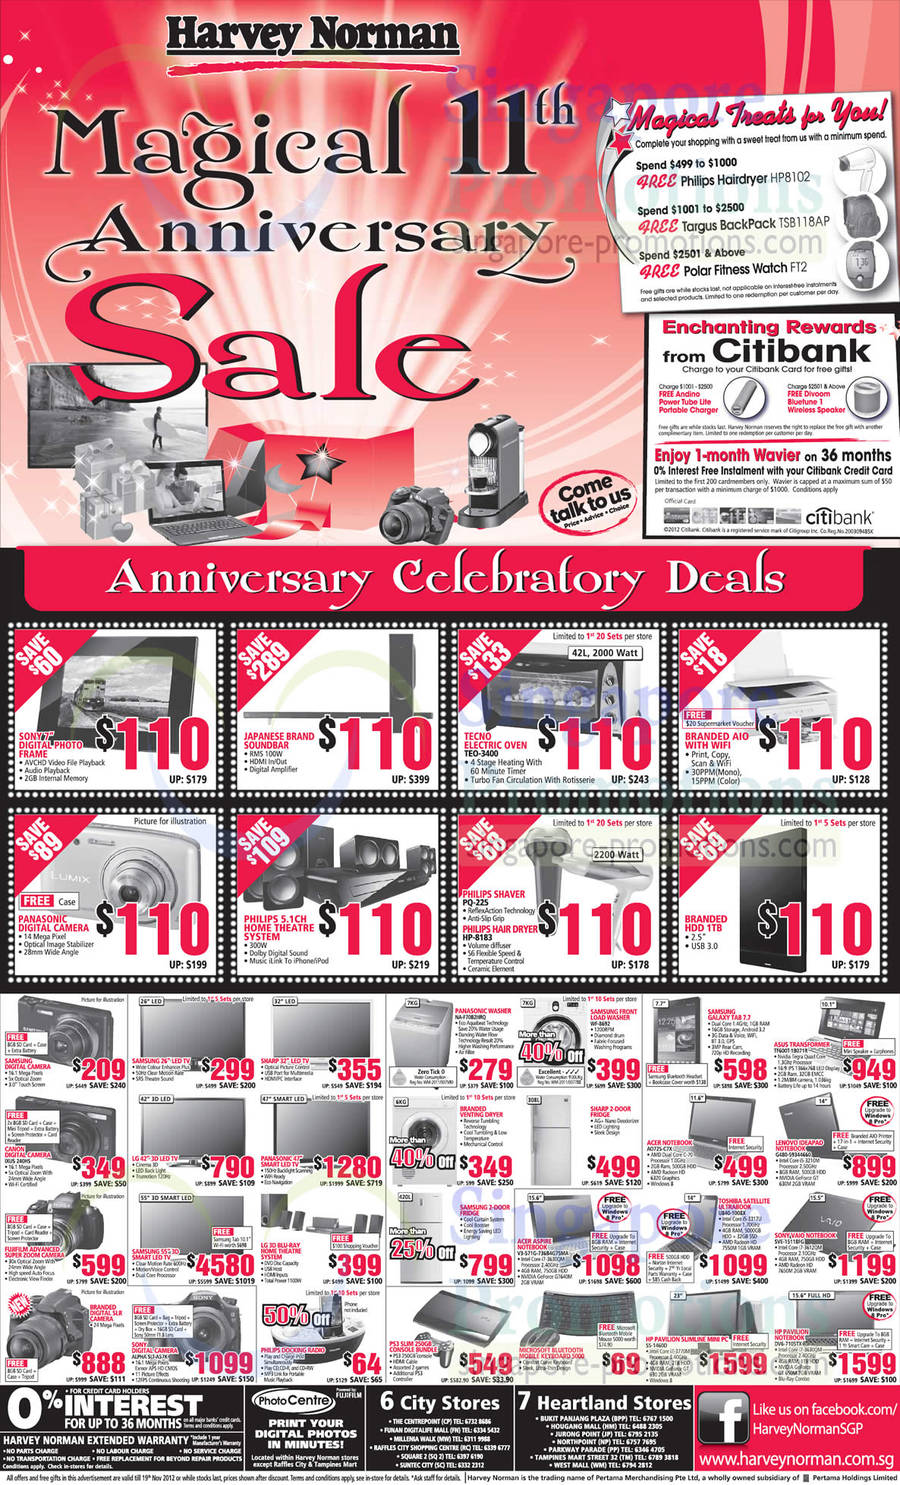 13 Nov 2012 110 Dollar Celebratory Deals, LED TVs, Washers, Fridges, Digital Cameras, Notebooks, Samsung, Canon, Fujifilm, HP, Sony, Lenovo